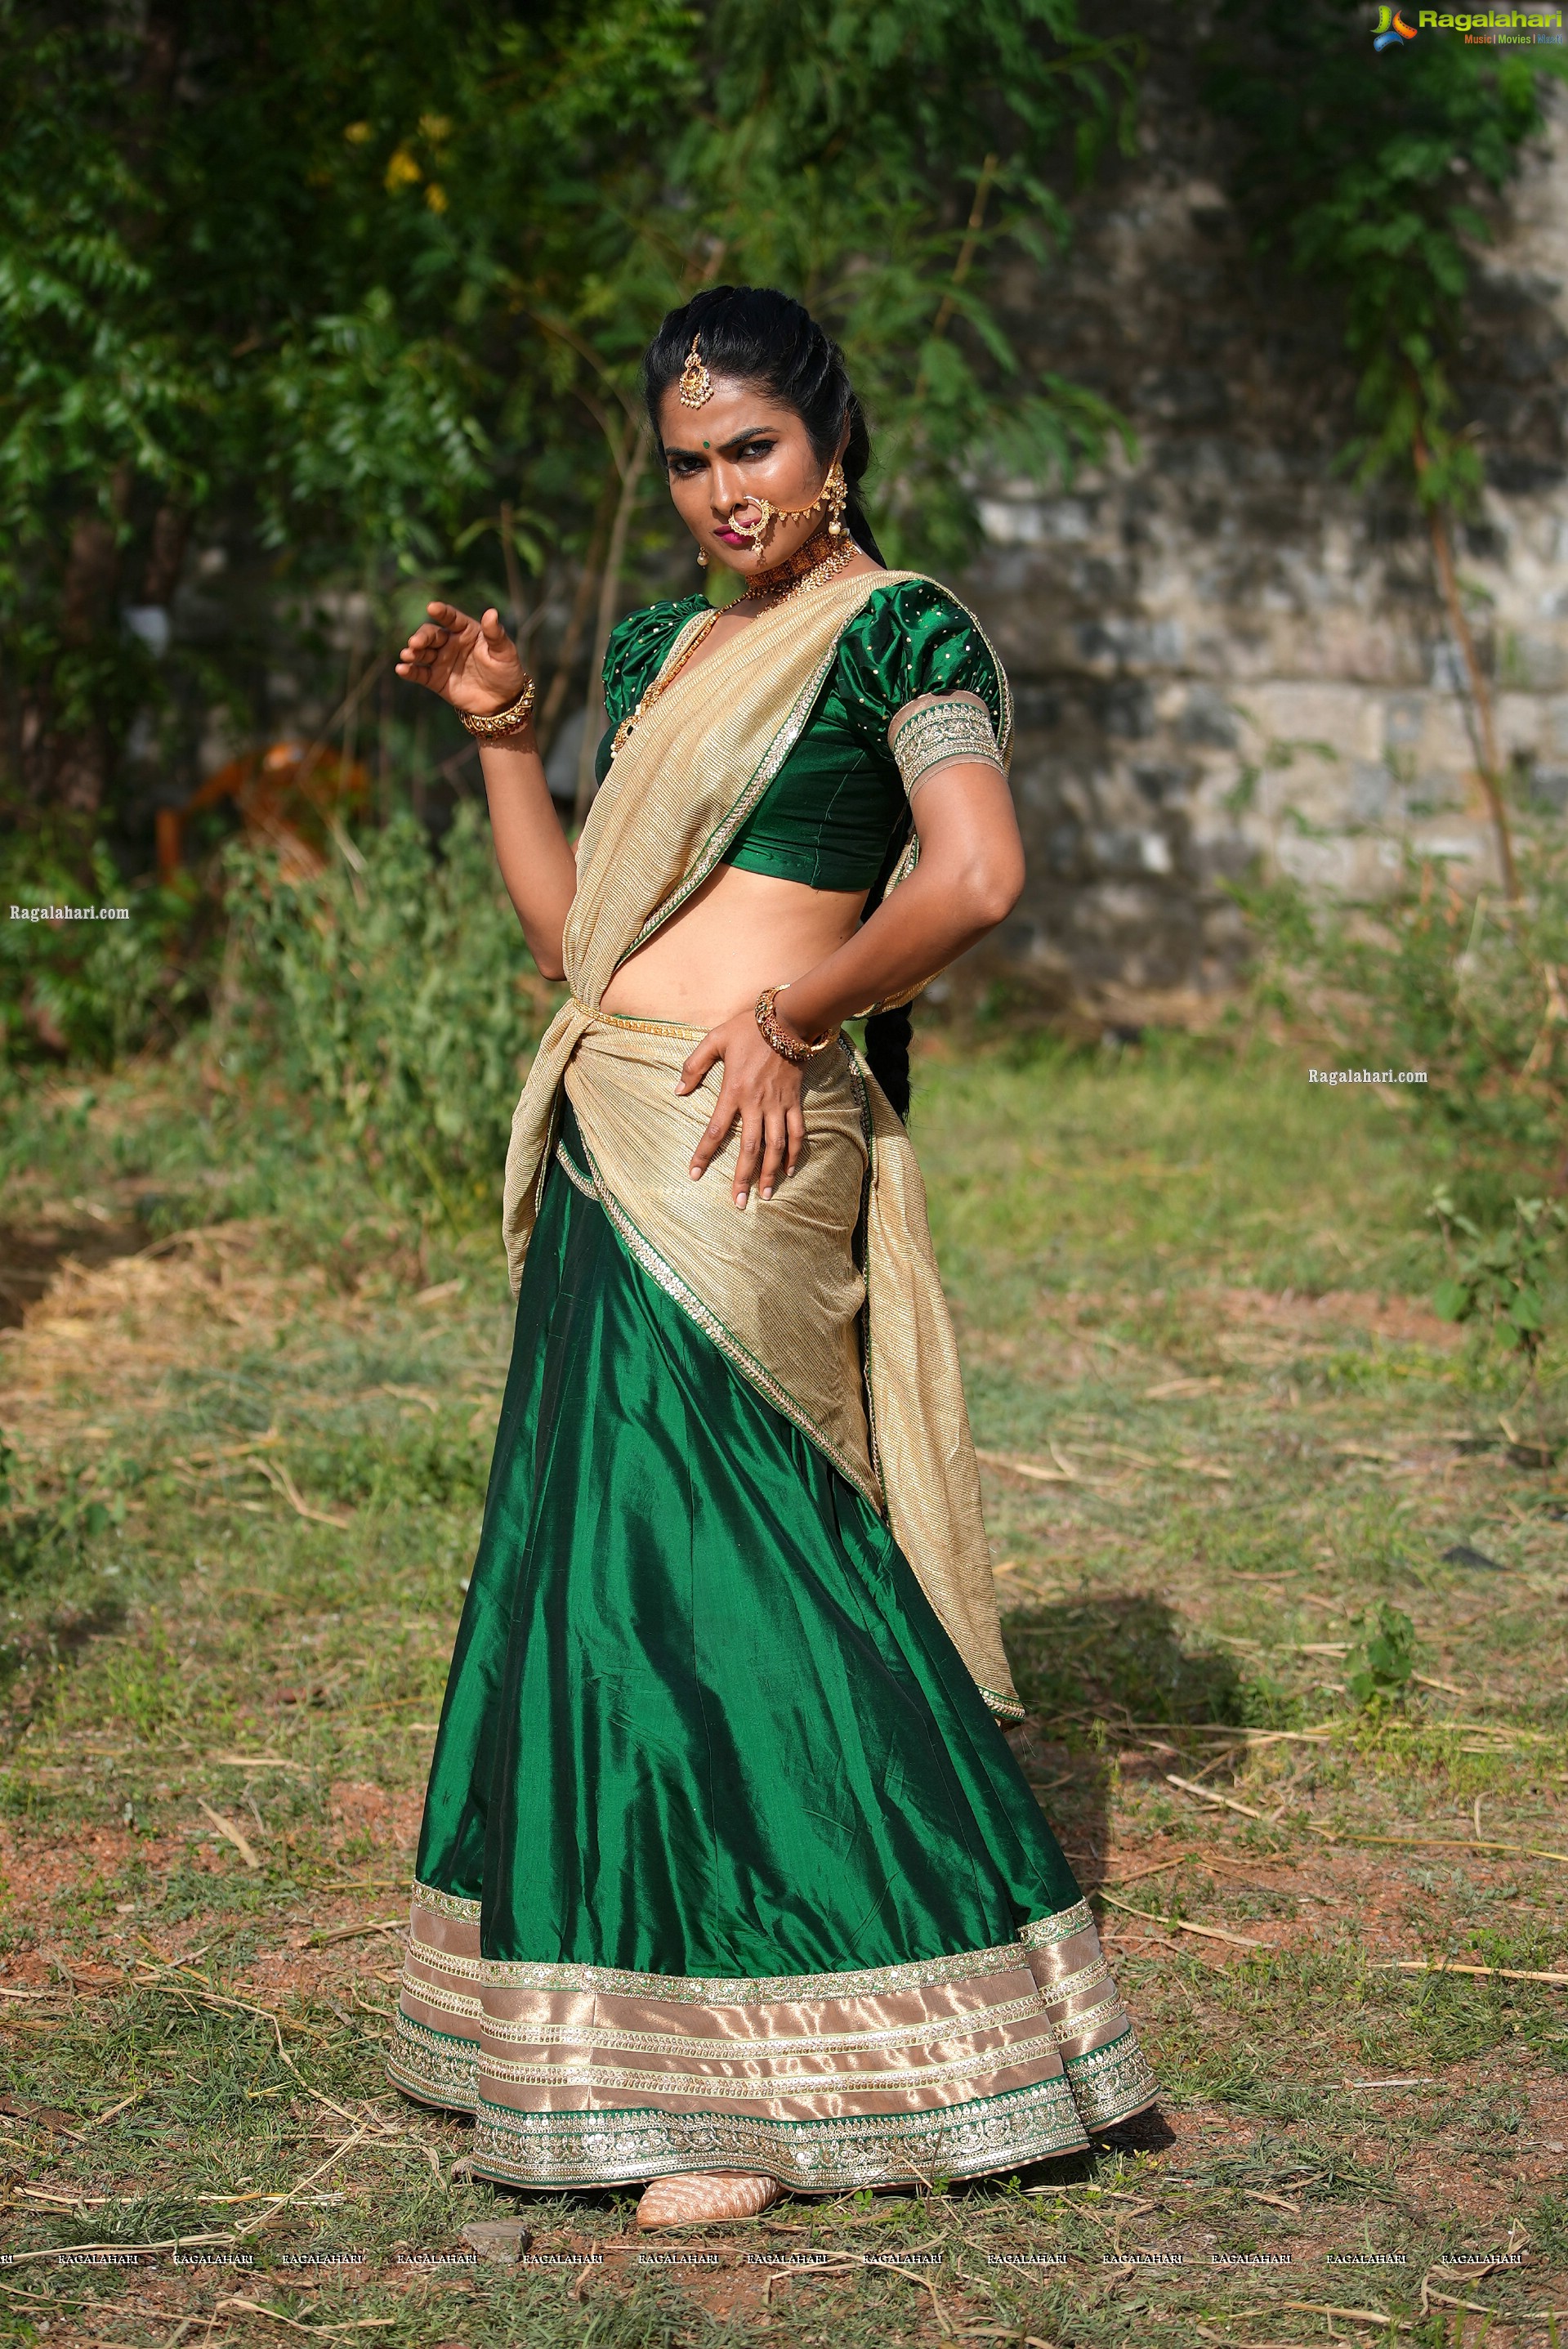 Divi Vadthya Stills From Telangana Folk Number Silaka Mukku Dana